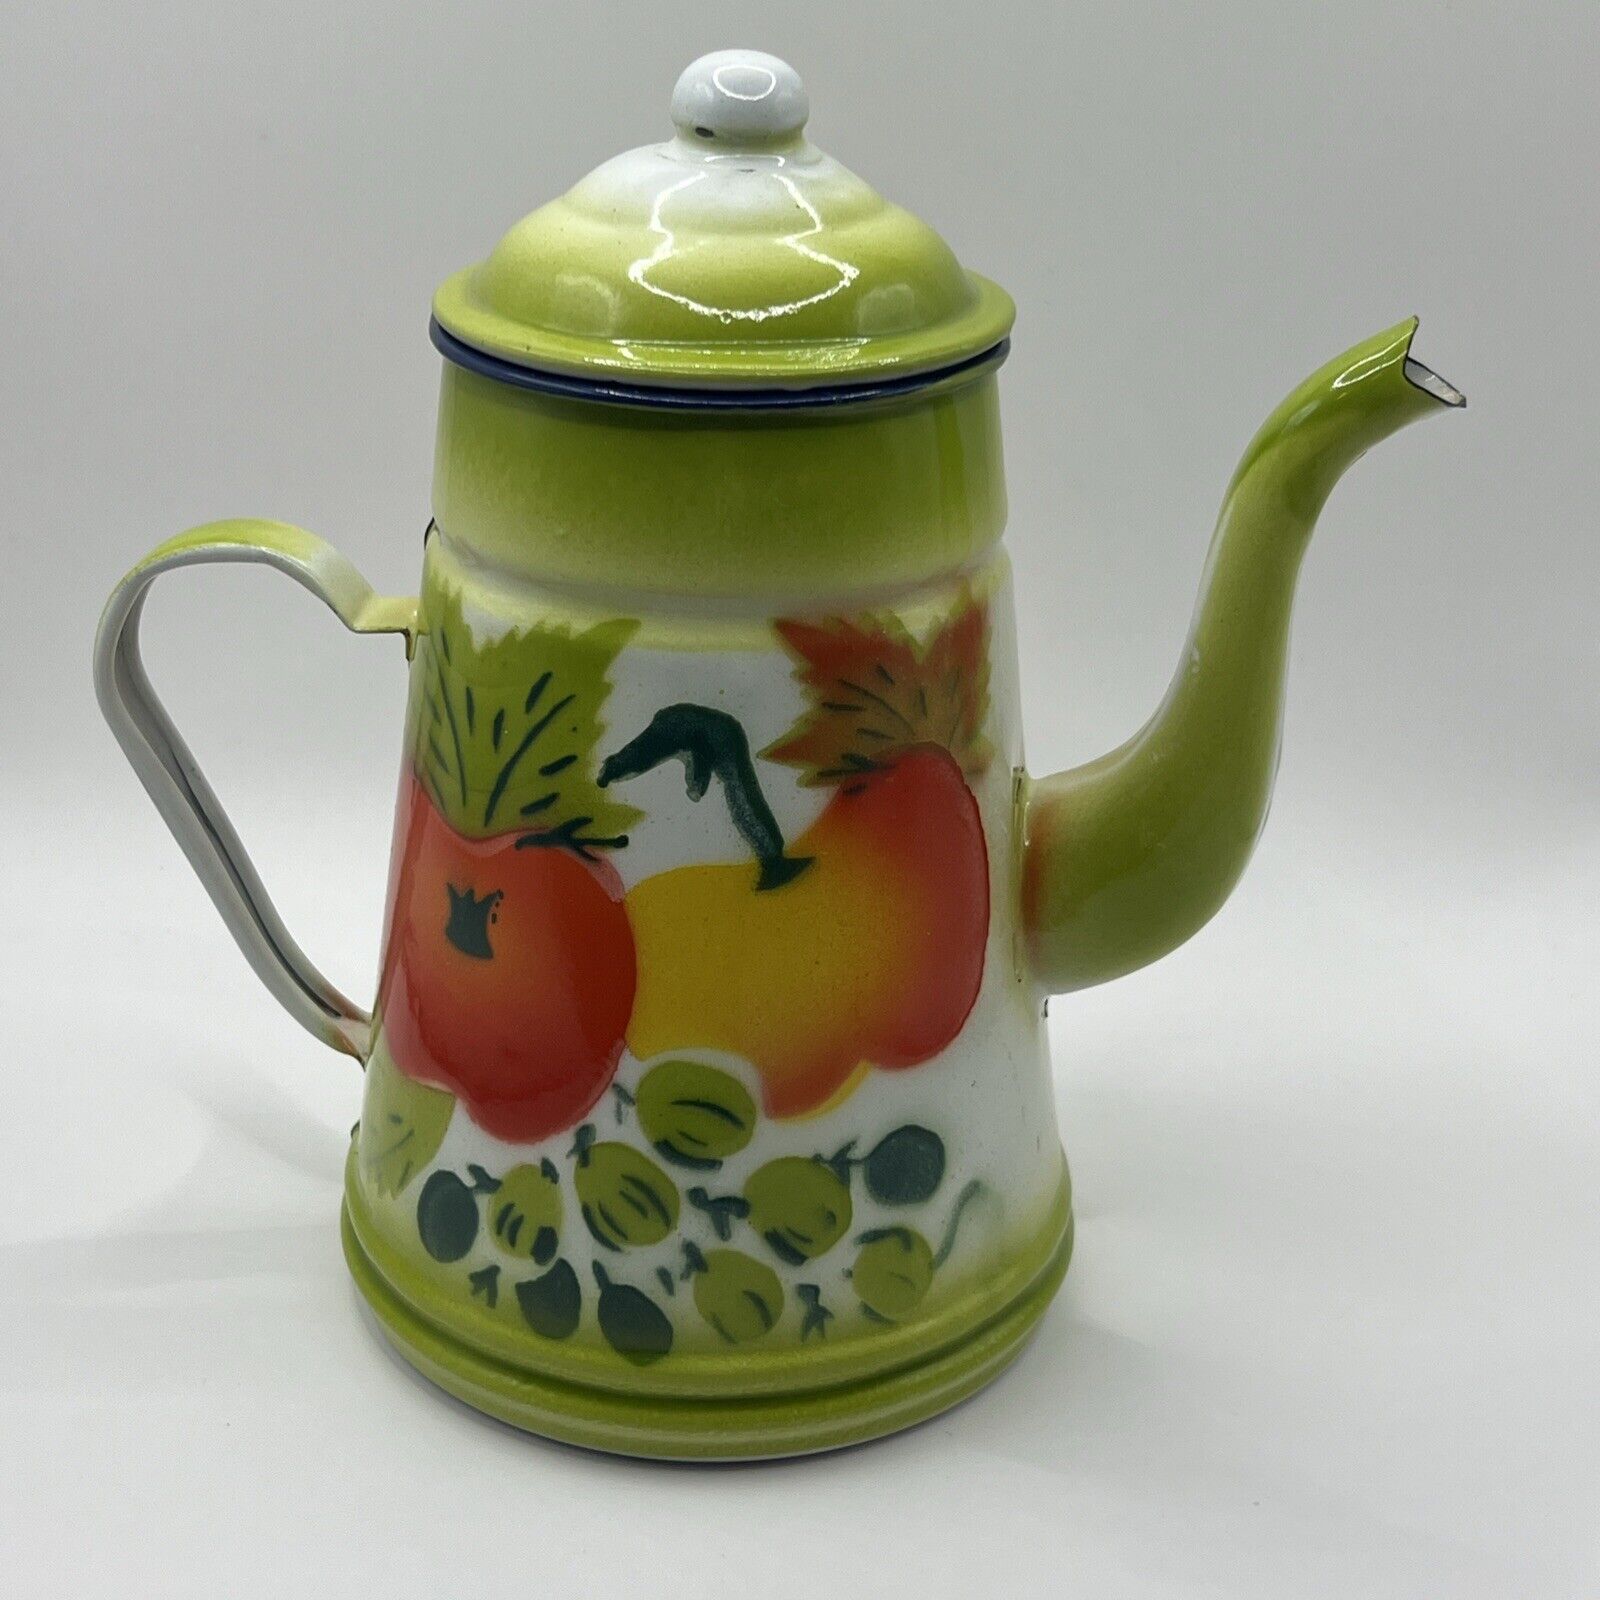 Vintage 60’s Metal Enamel Enamelware Pitcher Teapot Fruit Decoration